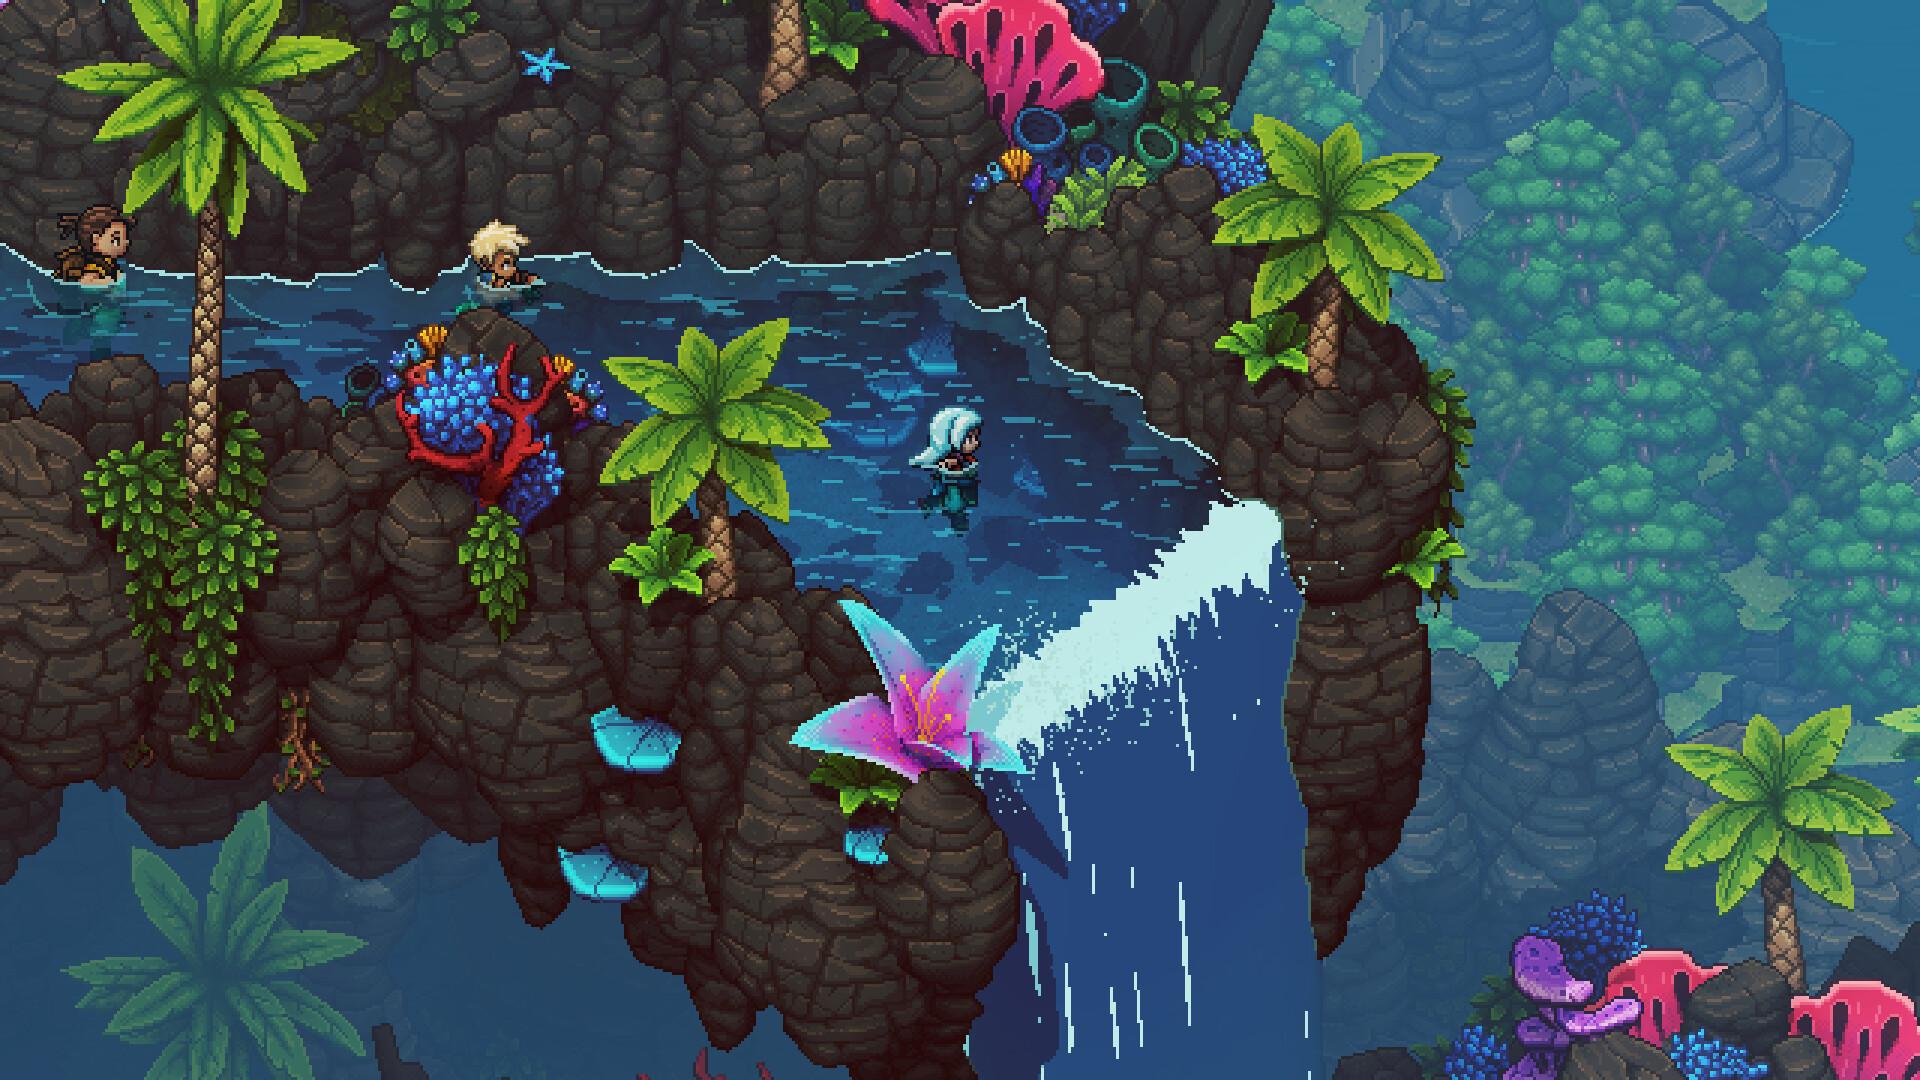 Screenshot №22 from game Sea of Stars